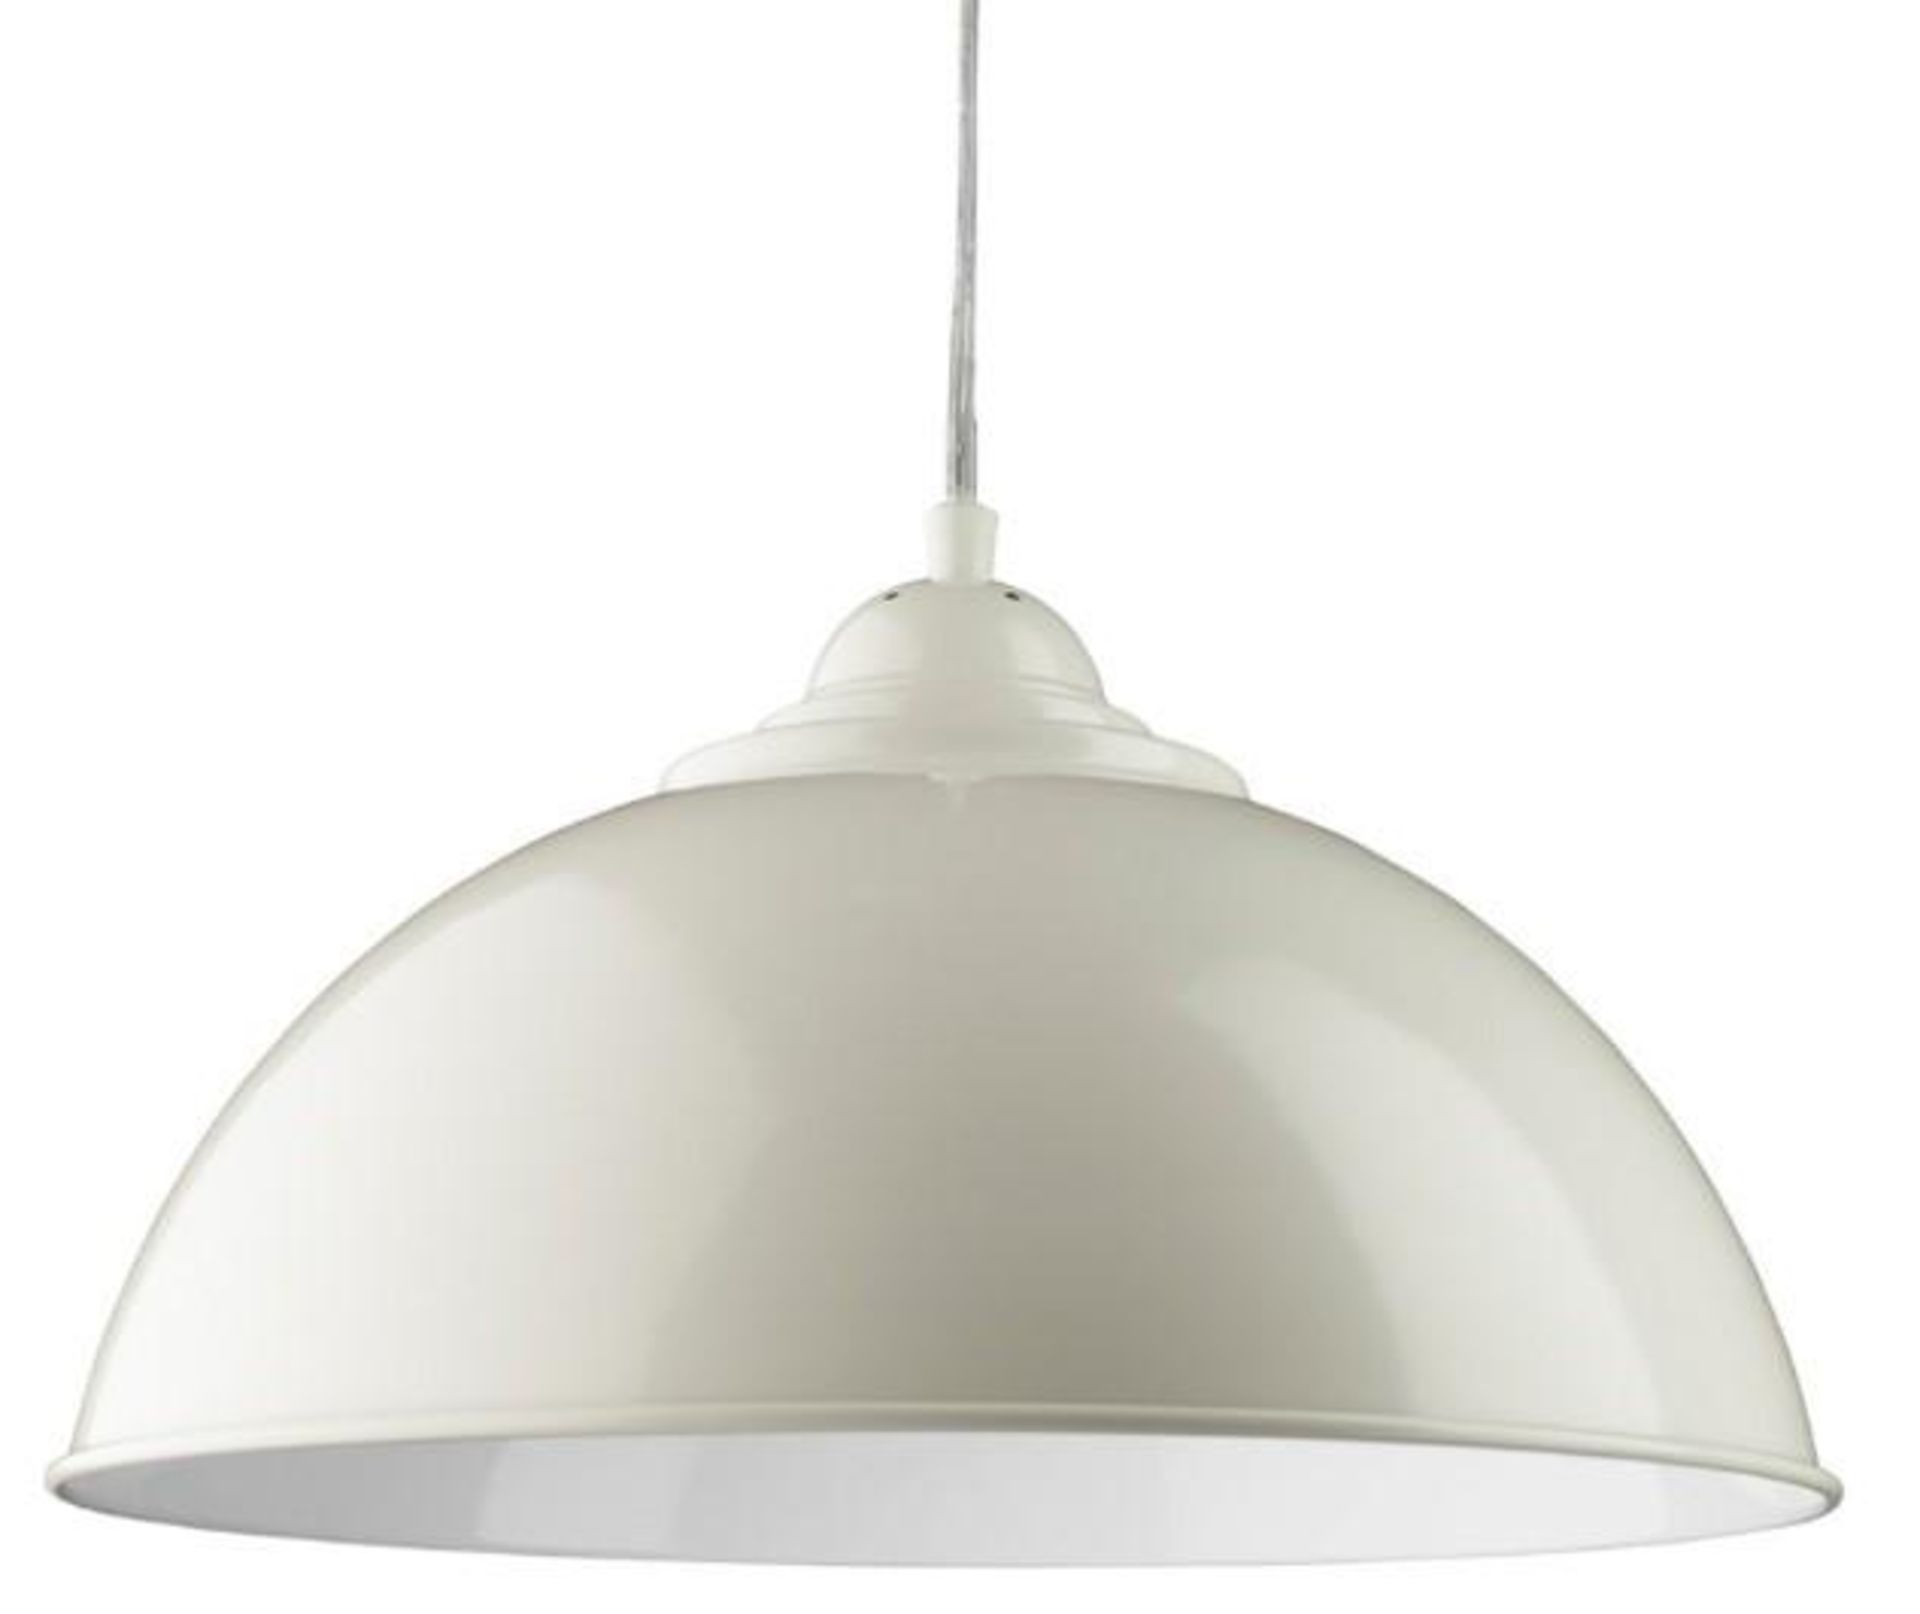 1 x SANFORD Cream Half Dome Metal Pendant Light With White Inner - 34cm Diameter - New/Unused Boxed - Image 4 of 4